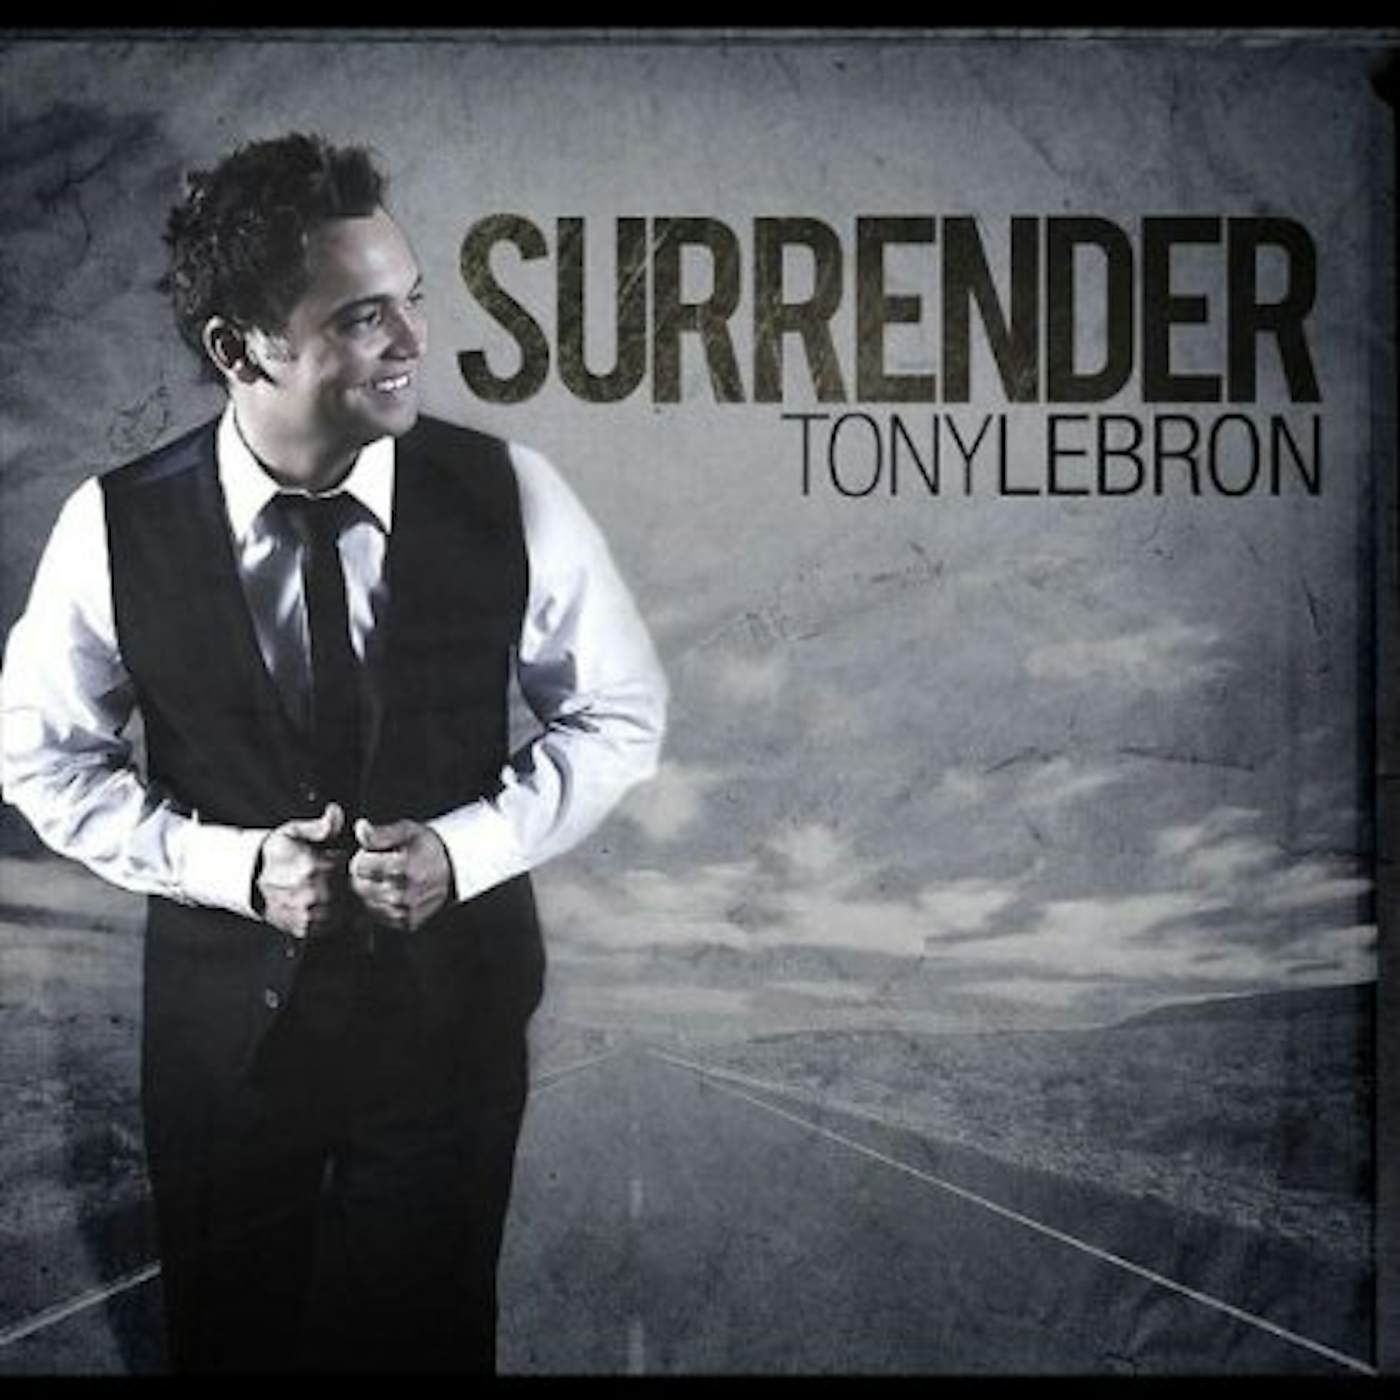 Tony LeBron SURRENDER CD